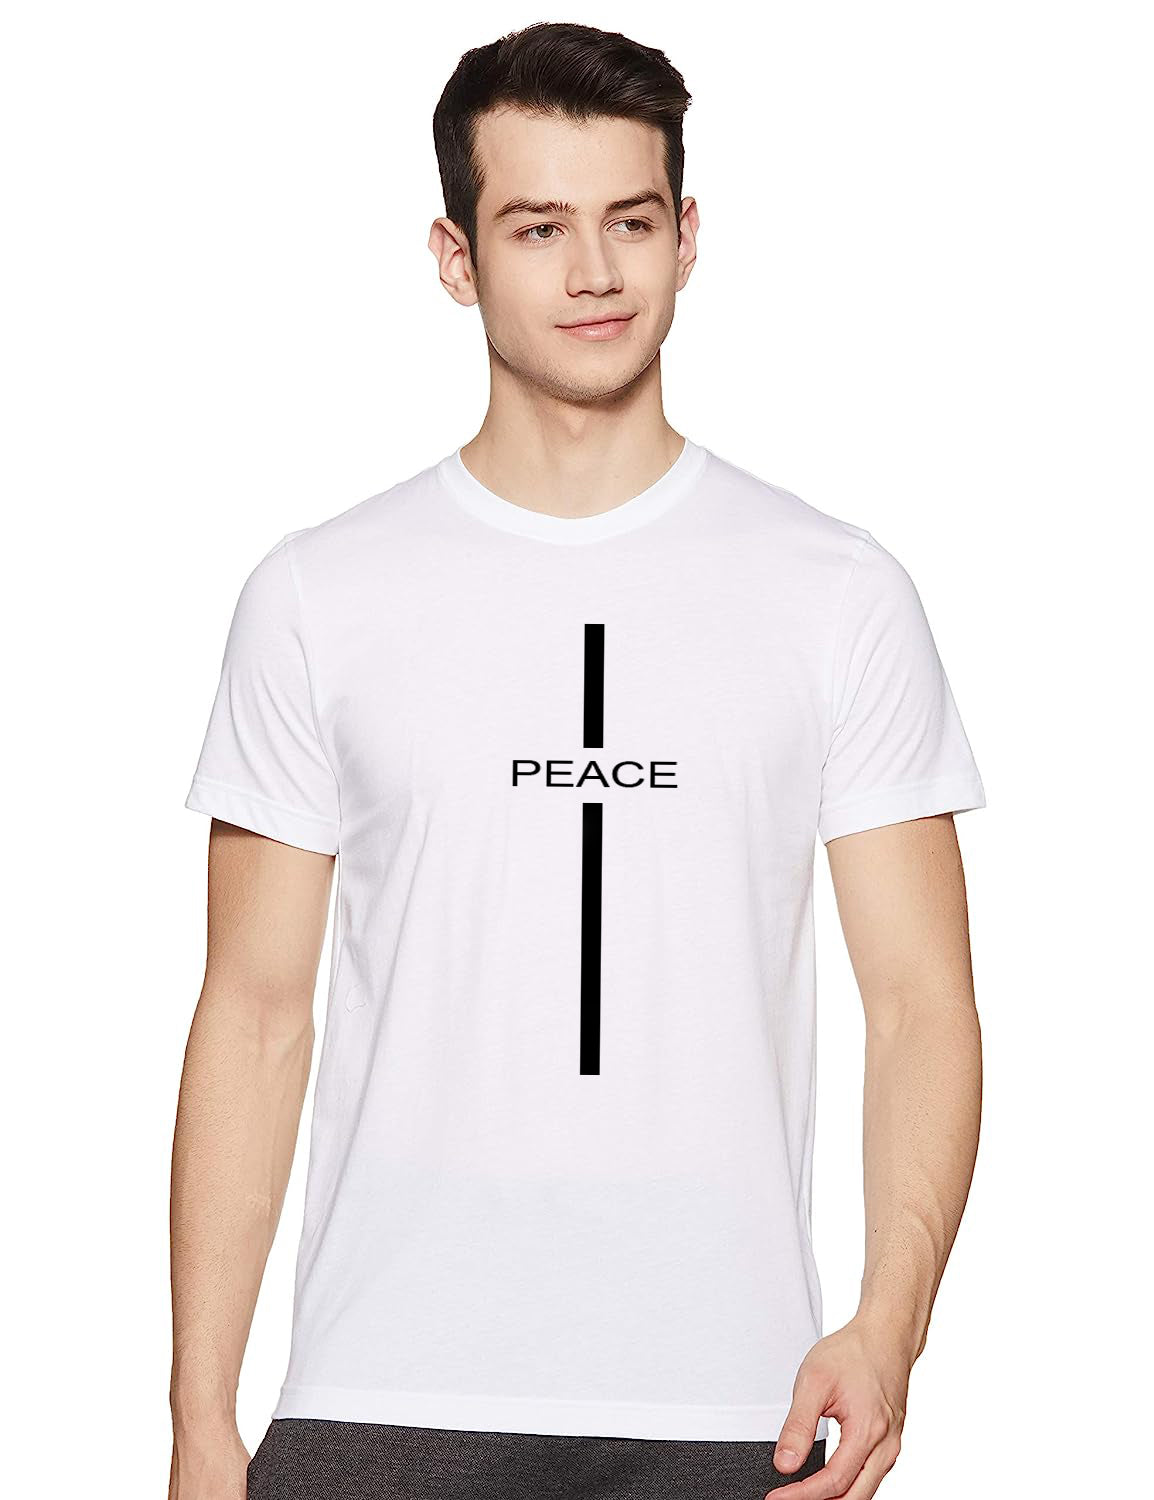 TheStyleO Cotton Half Sleeve Peace Tees| T-Shirt